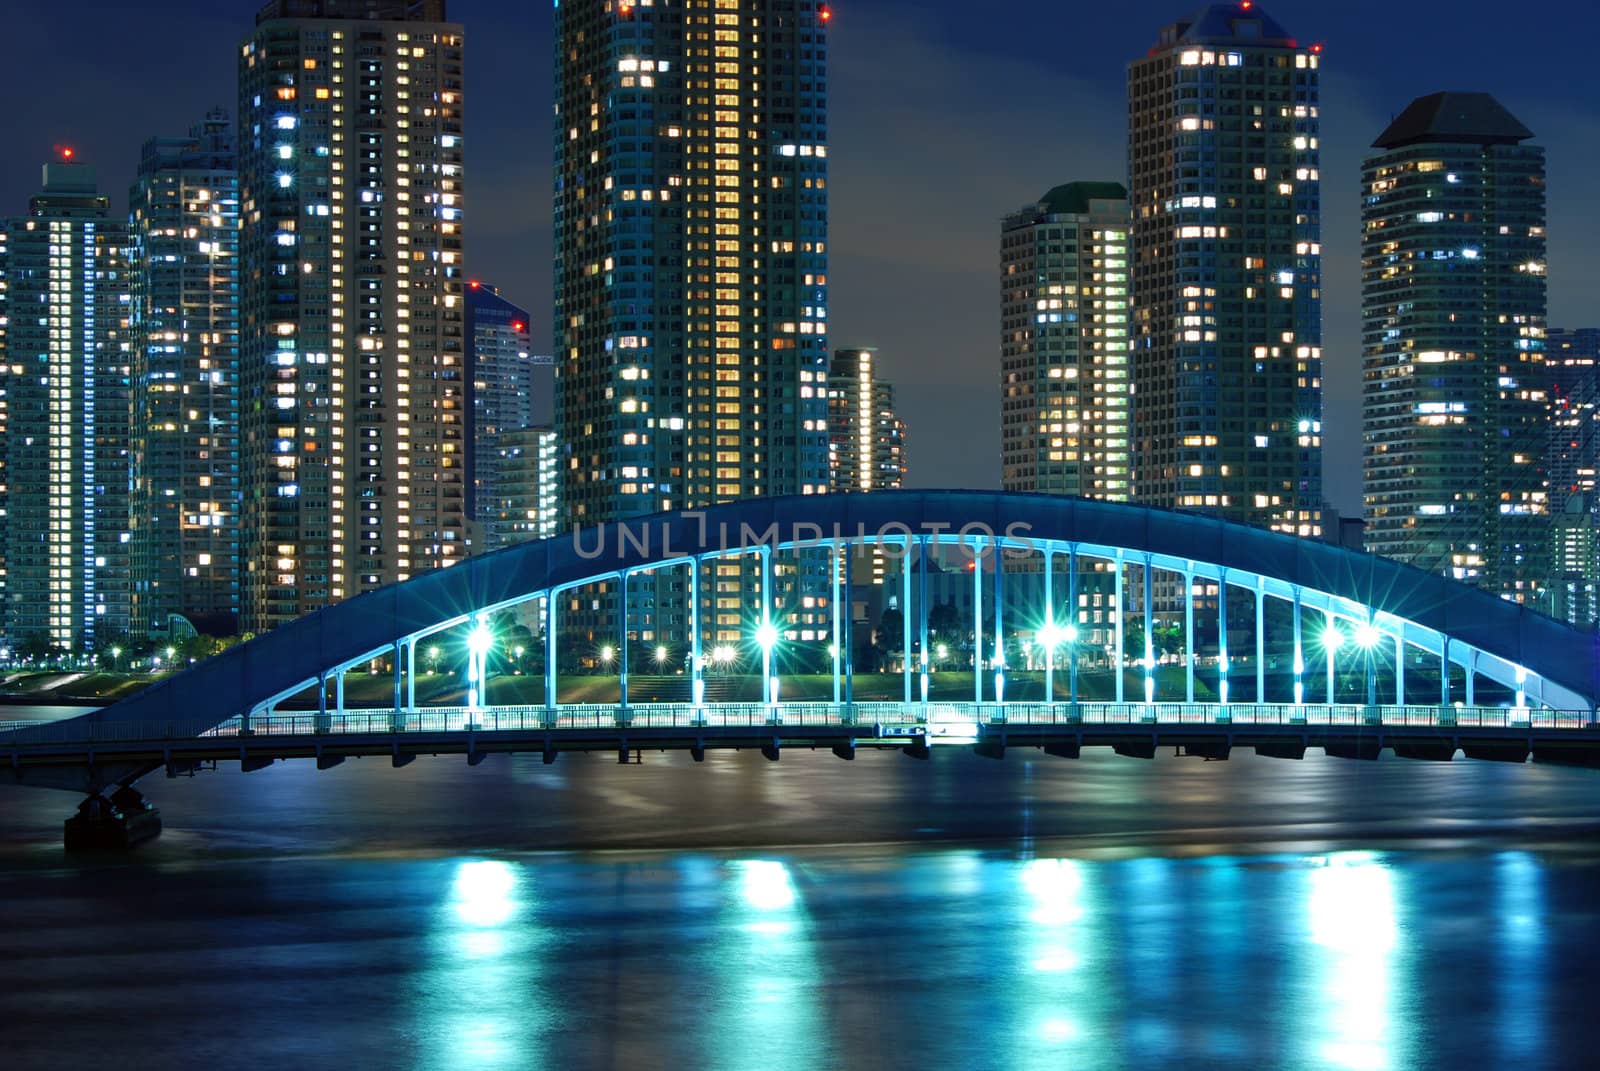 scenic Eitai bridge over Sumida river at night time, Tokyo Japan